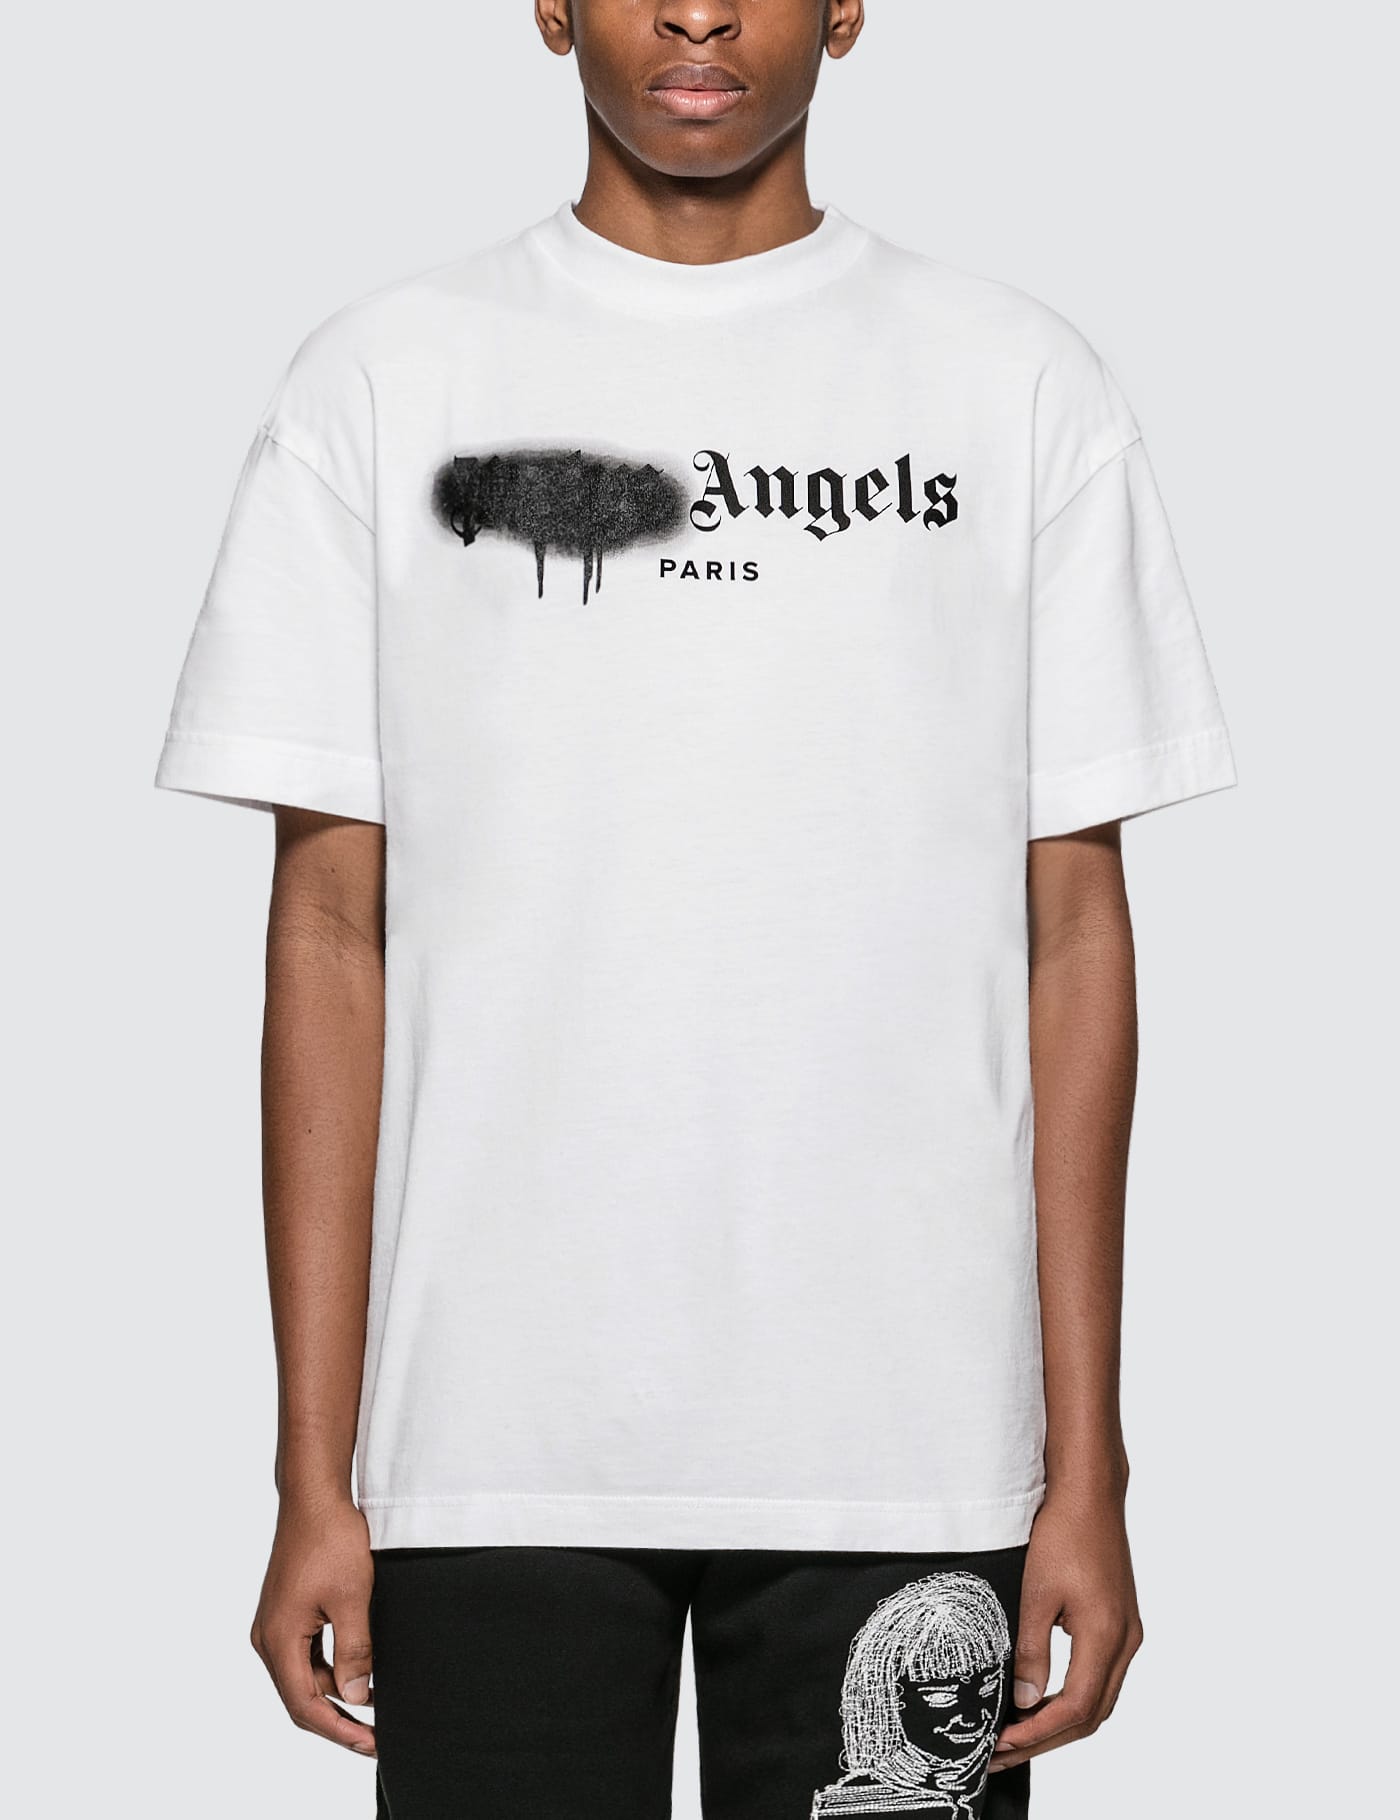 paris angels t shirt